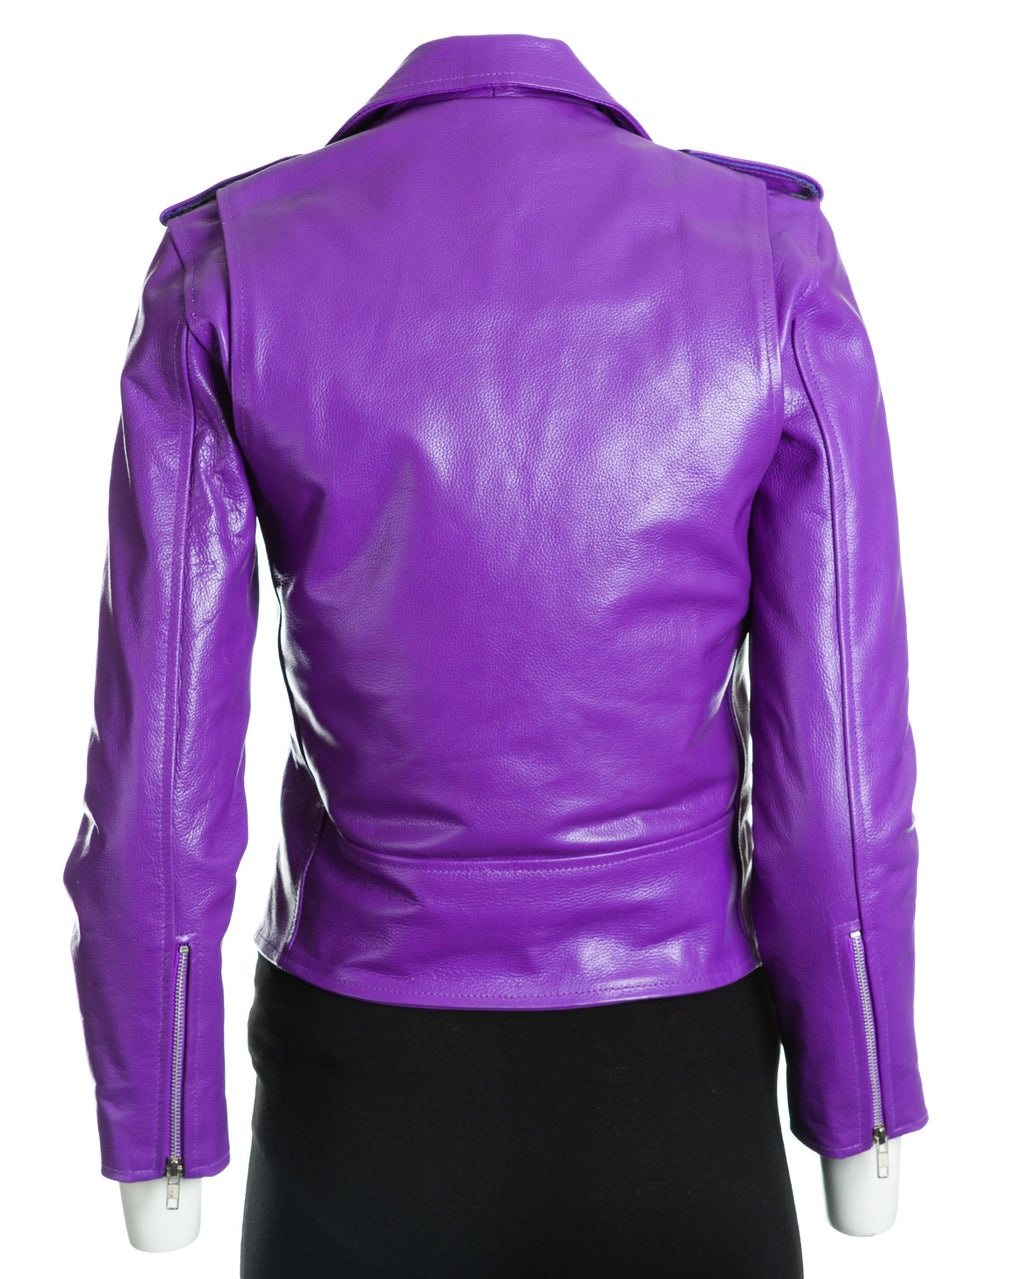 Women's White Classic Brando Biker Style Cow Hide Leather Jacket: Gemma